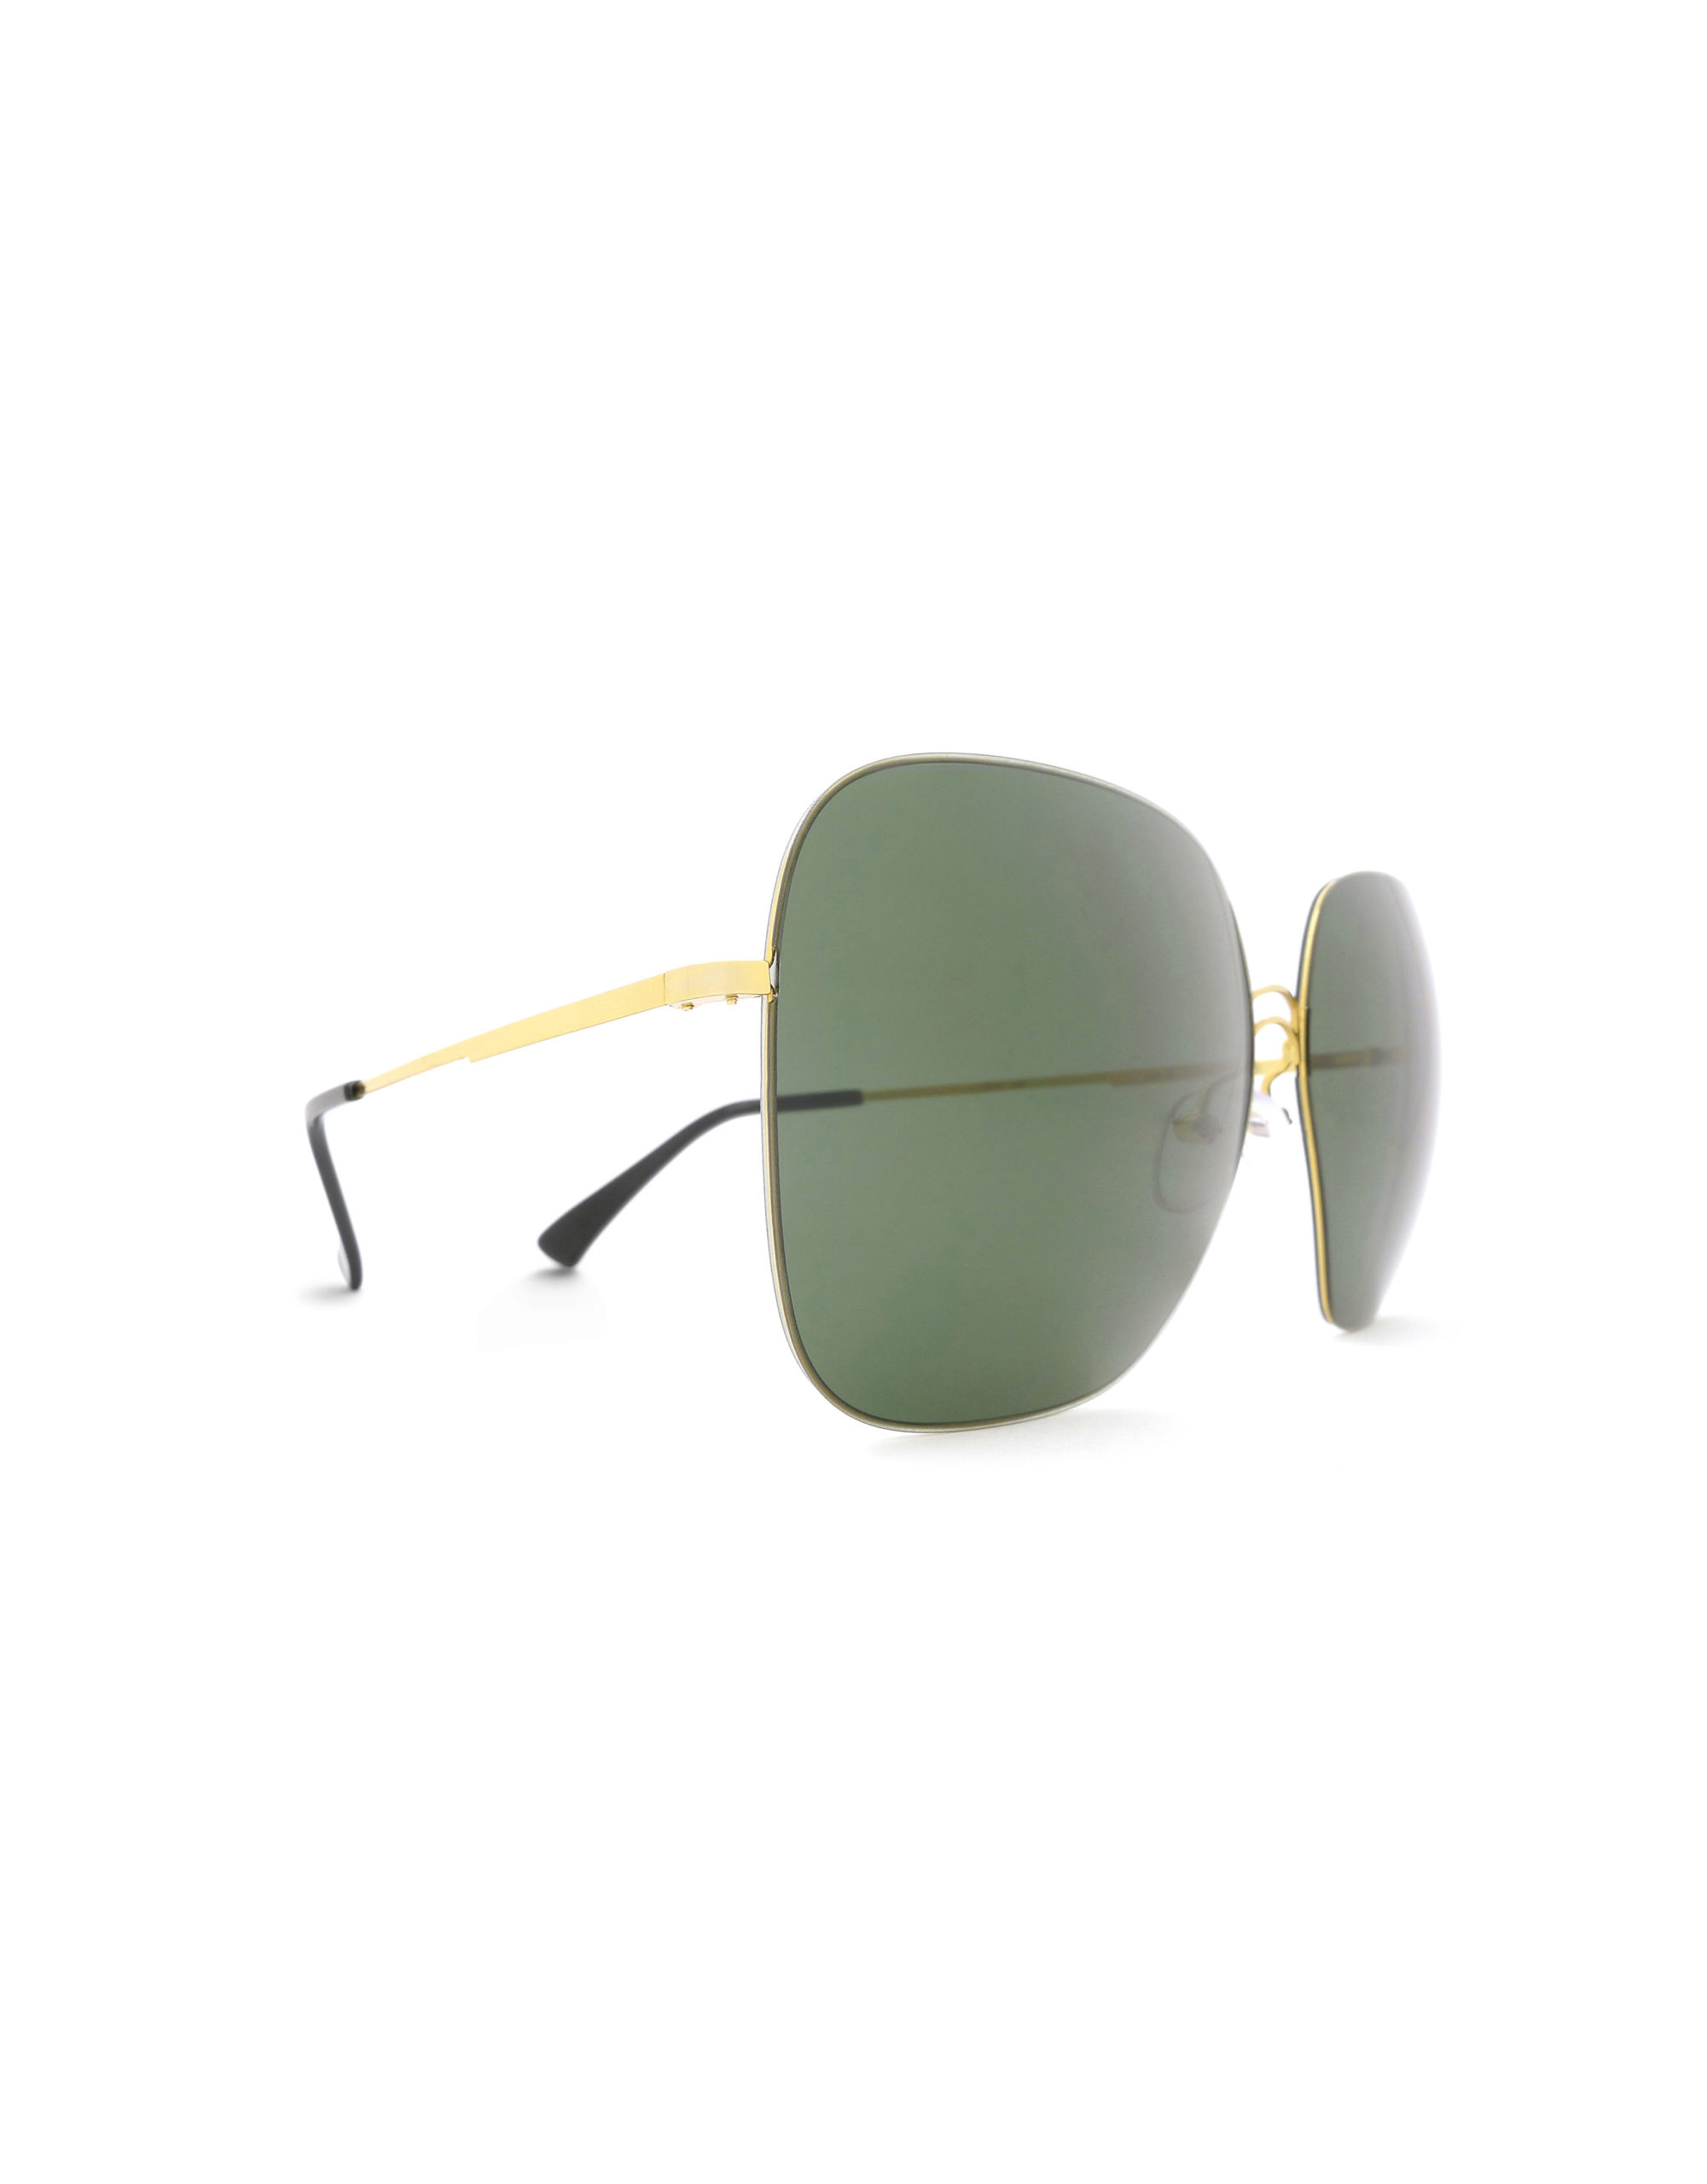 ZERO 16 Dark Green - Luxury Sunglasses, Designer Sunglasses | Finest Seven